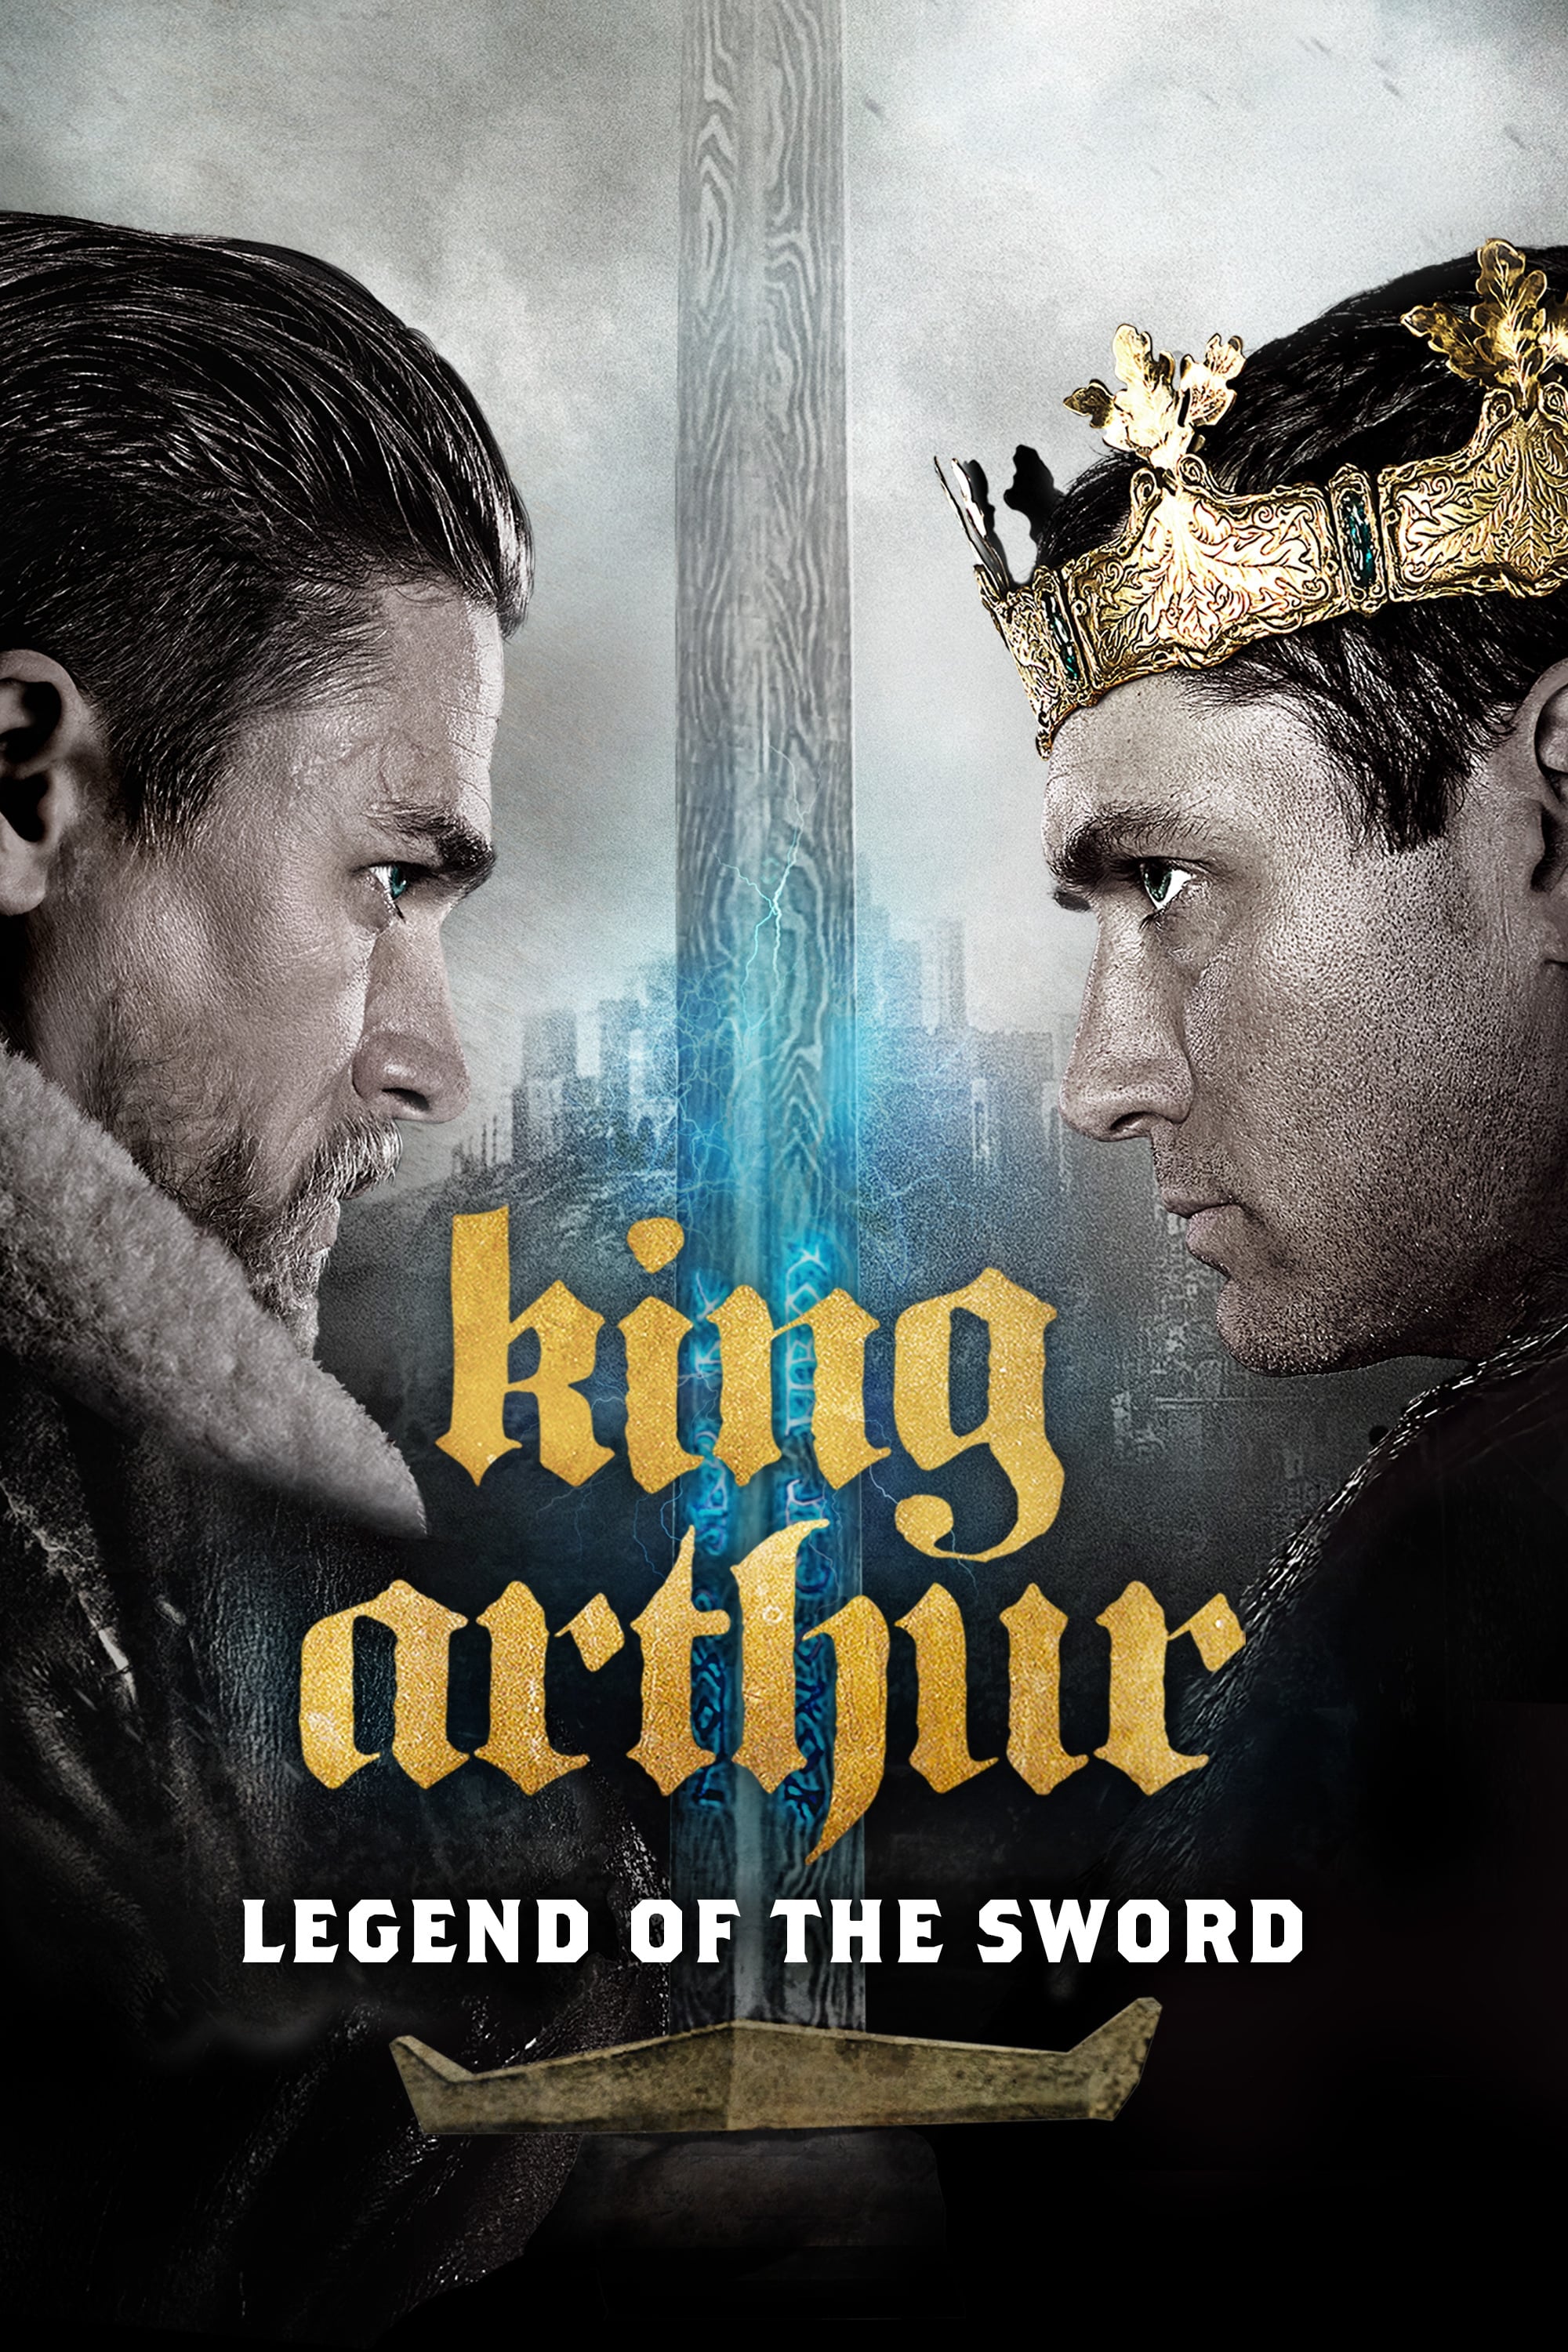 Legends of king arthur. Меч короля Артура / King Arthur Legend of the Sword / 2017. Меч короля Артура 2017 Постер.